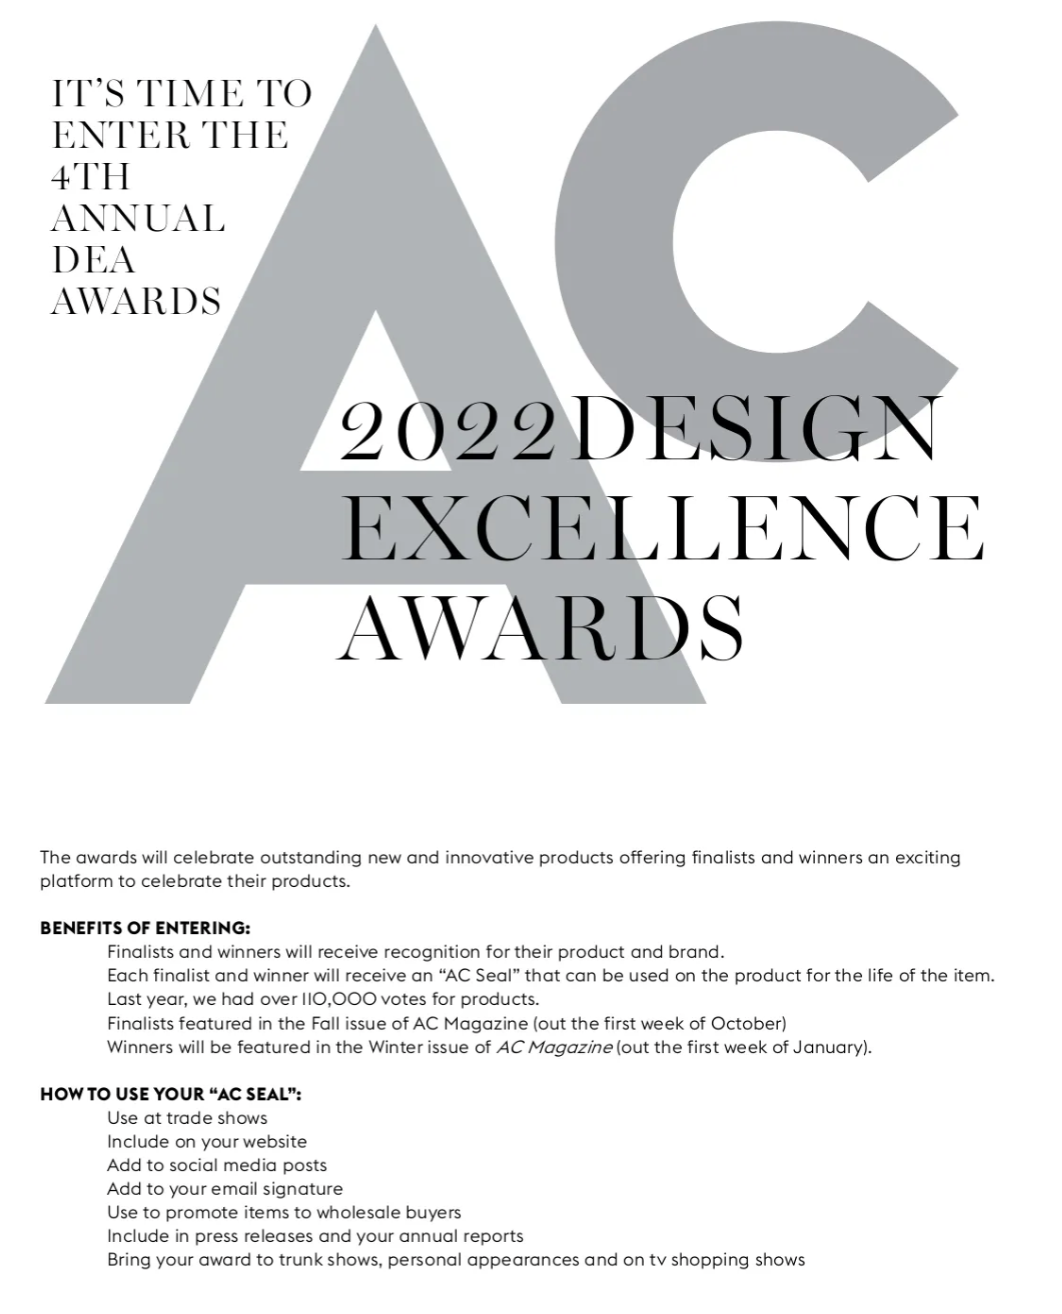 Design Excellence Awards